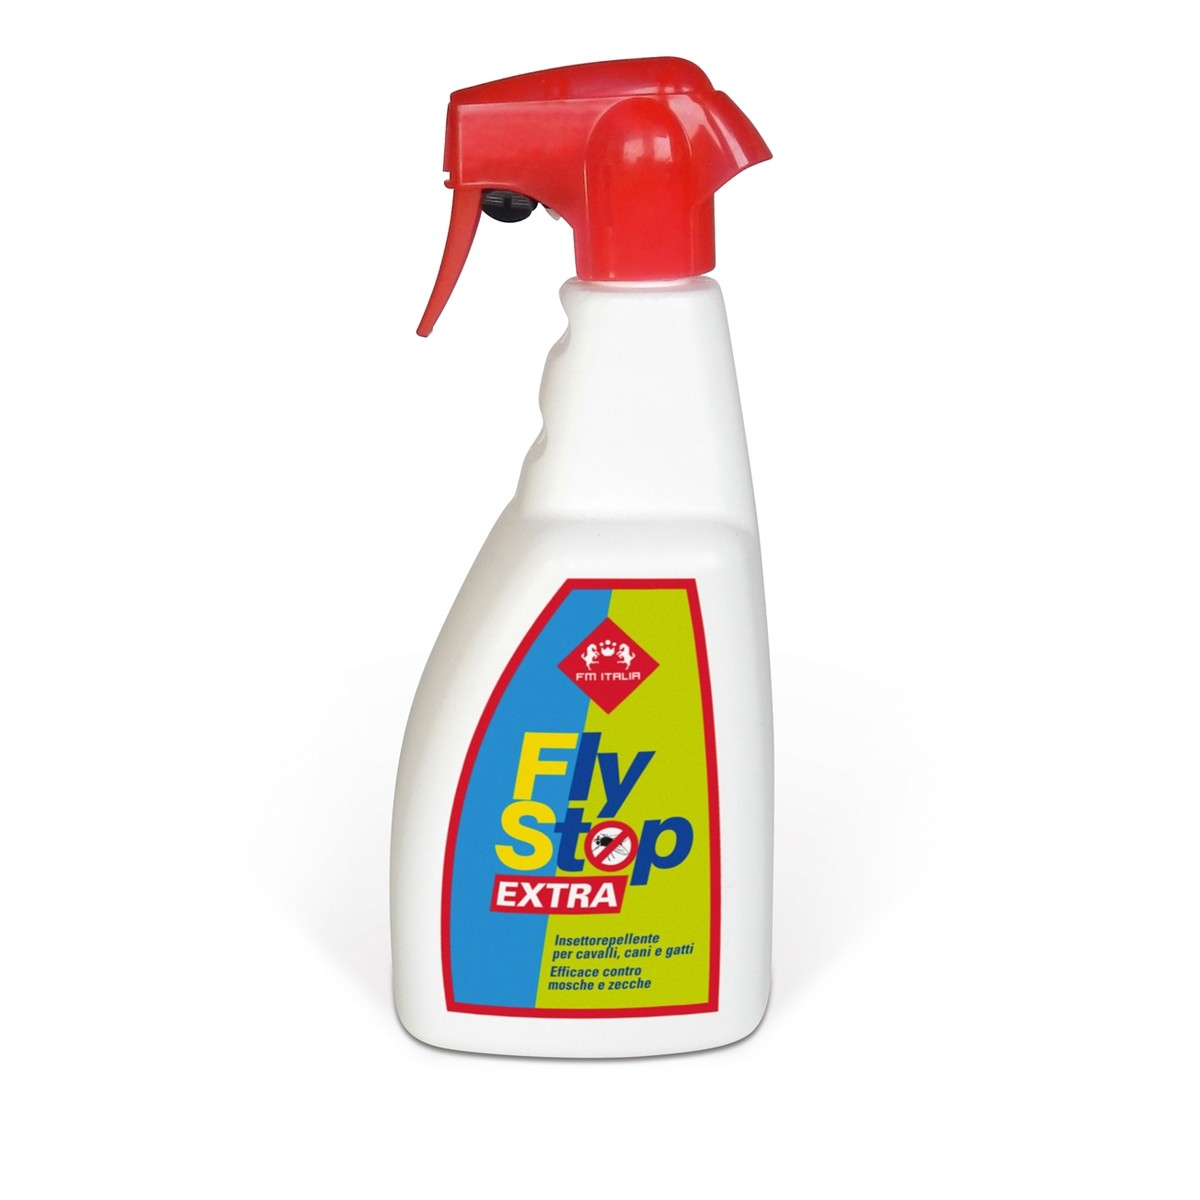 Repellente Fly stop extra 750 ml FM Italia